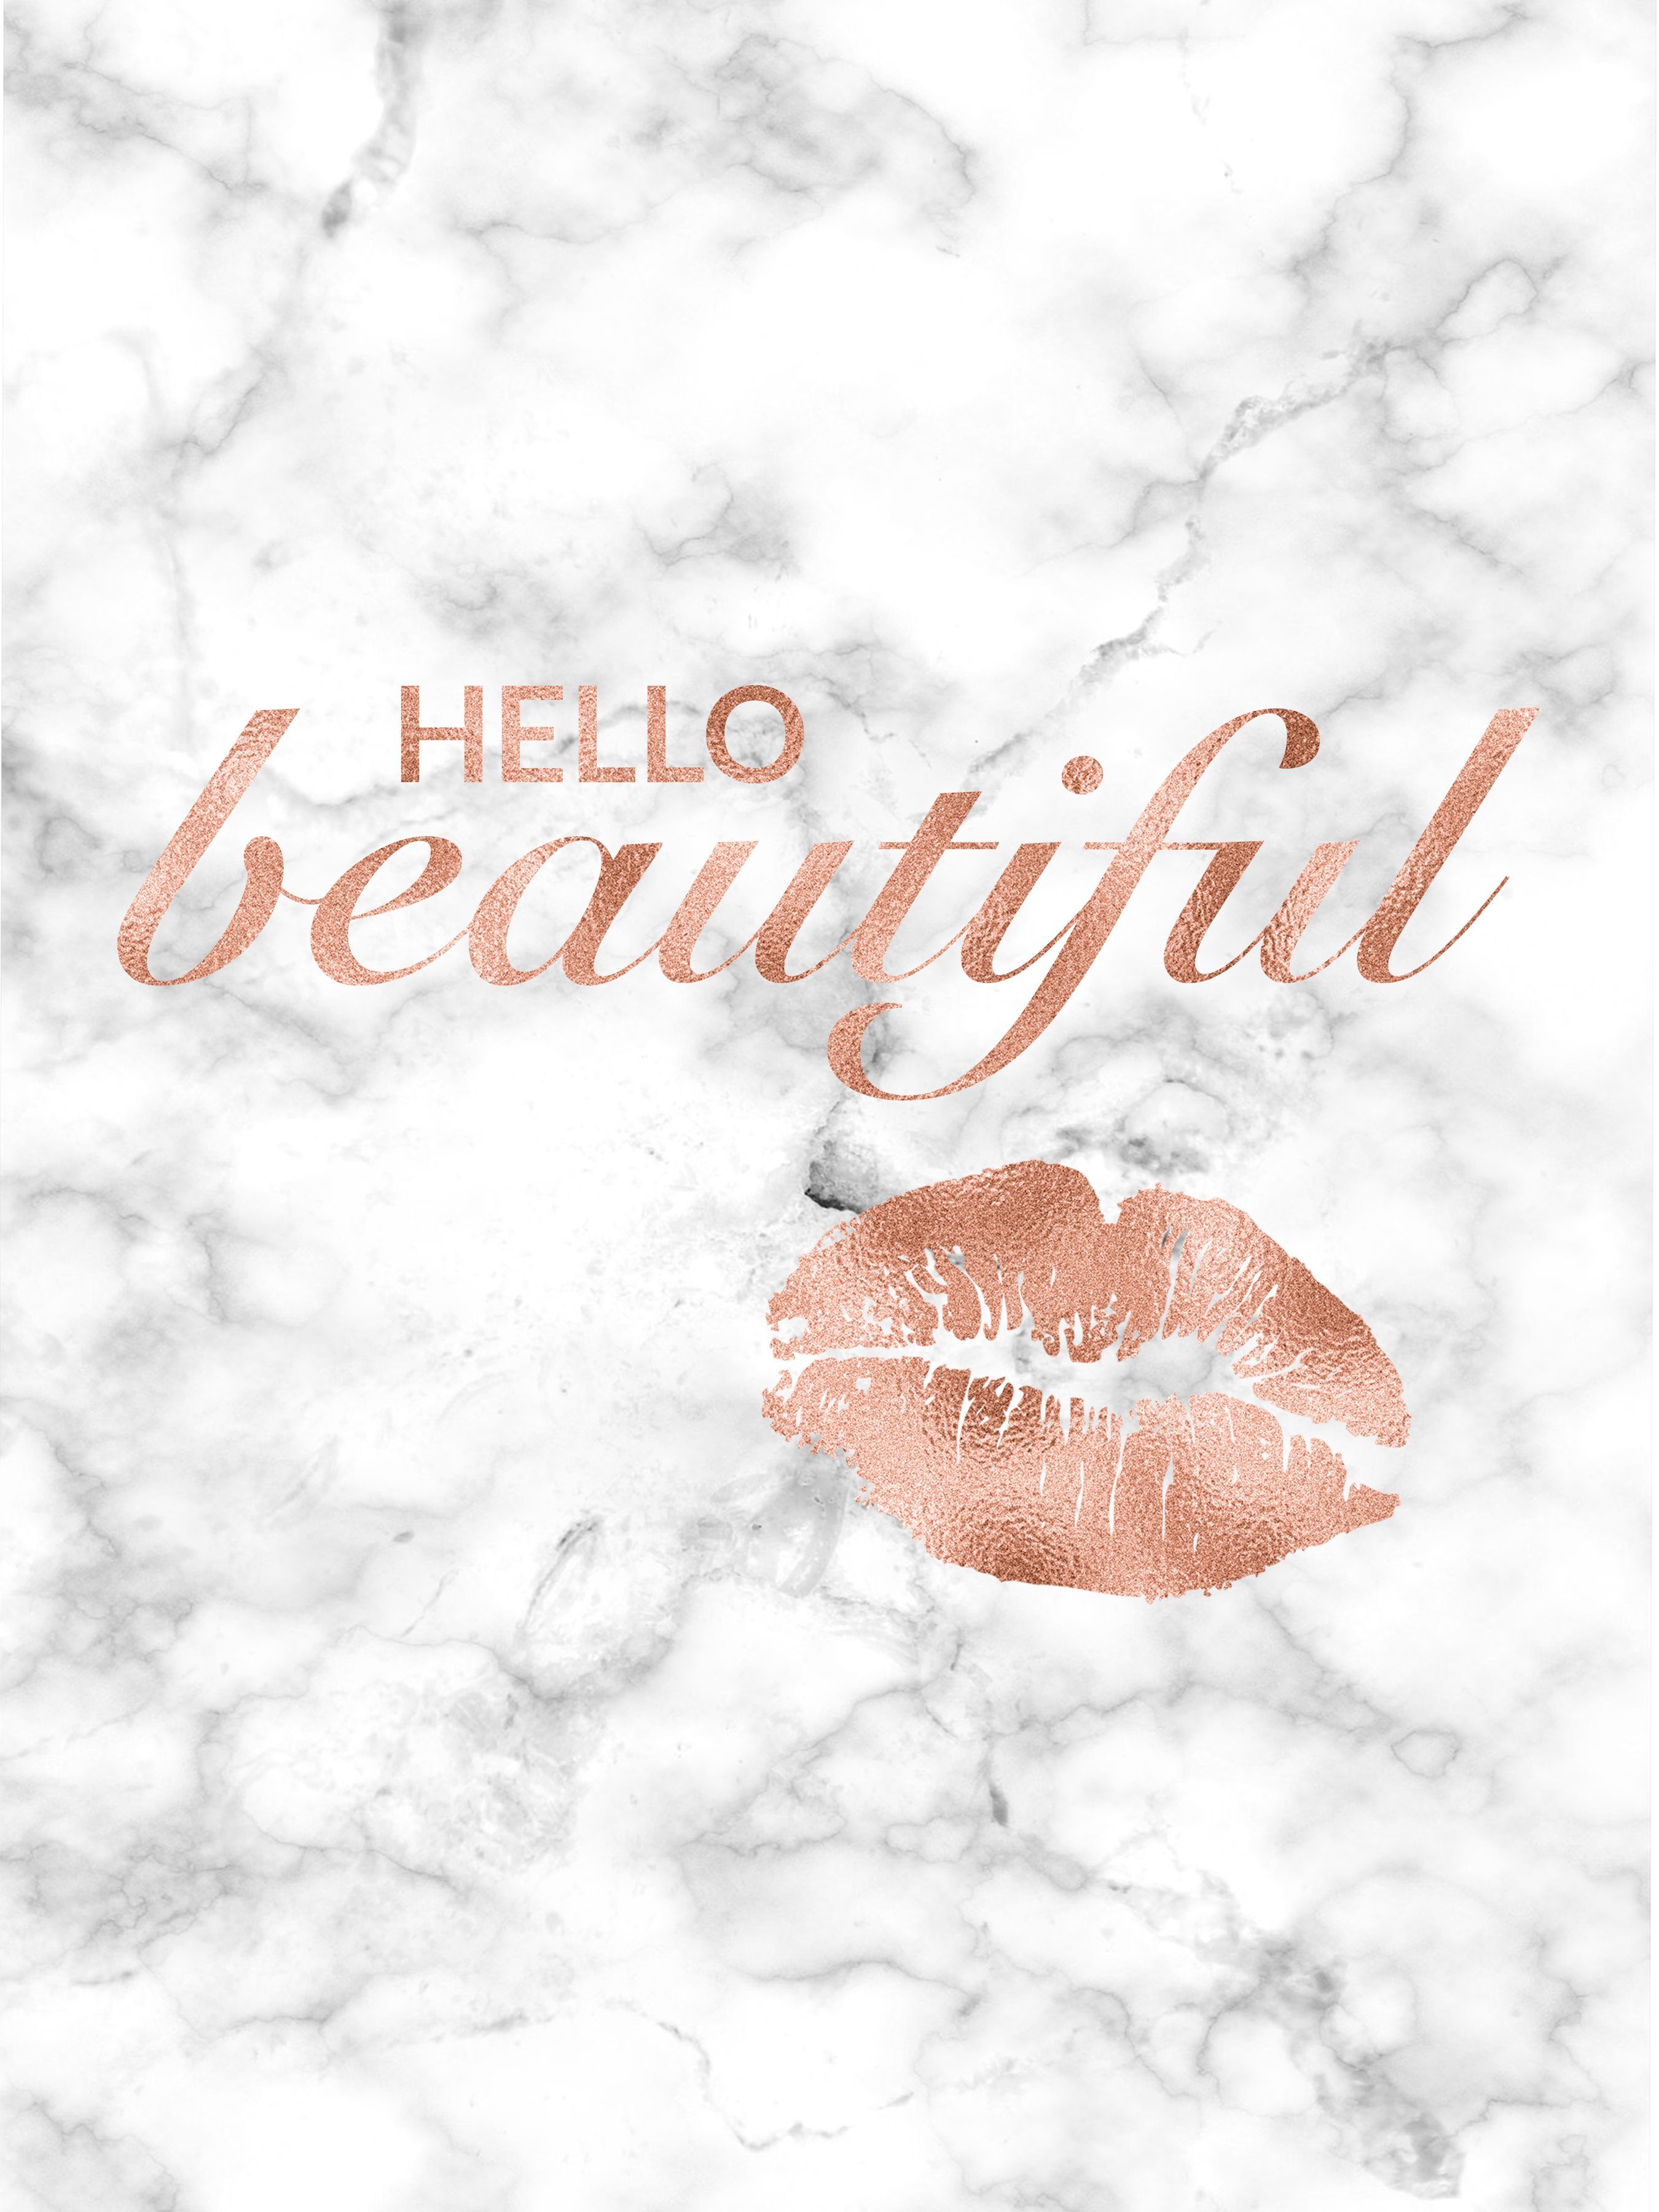 Hello beautiful - aesthetic Wallpaper Download